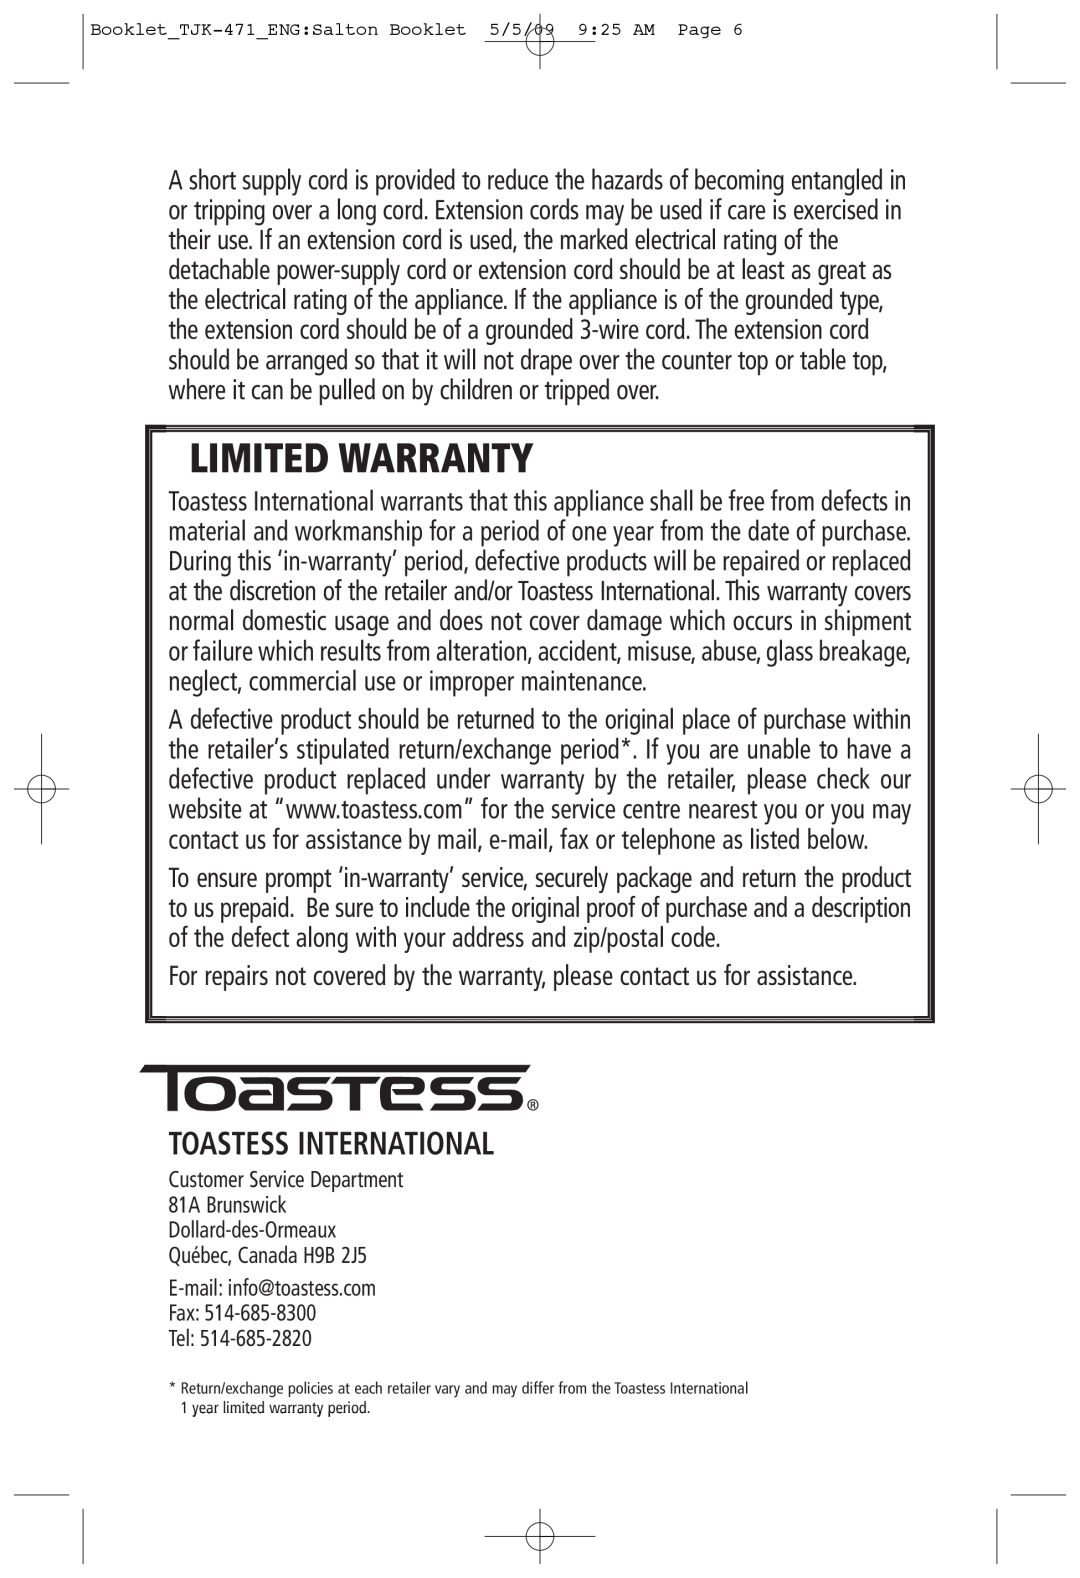 Toastess TJK-471 manual Toastess International, Limited Warranty 